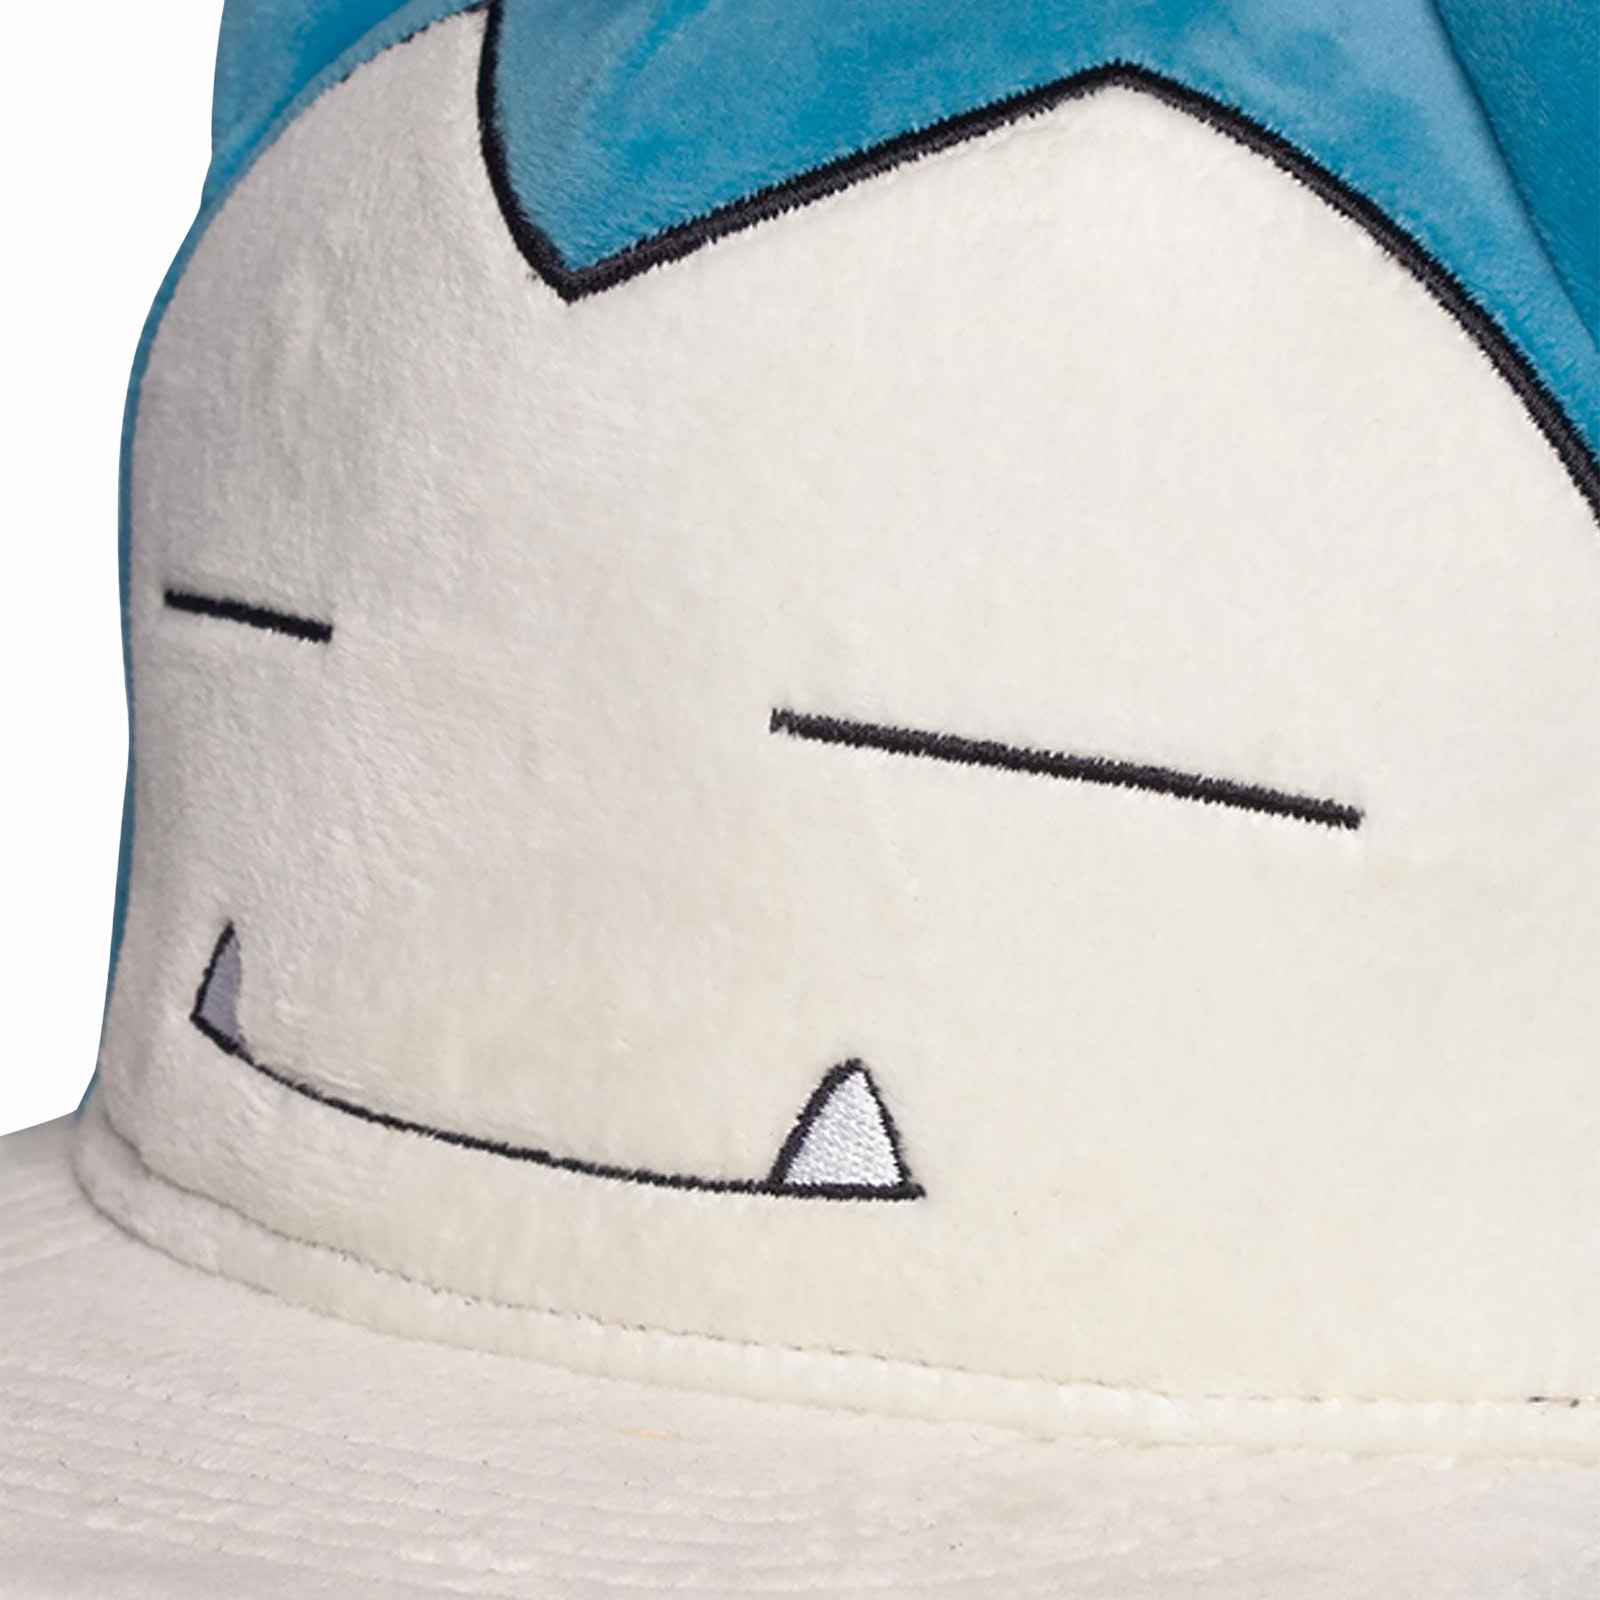 Pokemon - Snorlax Plush Snapback Cap